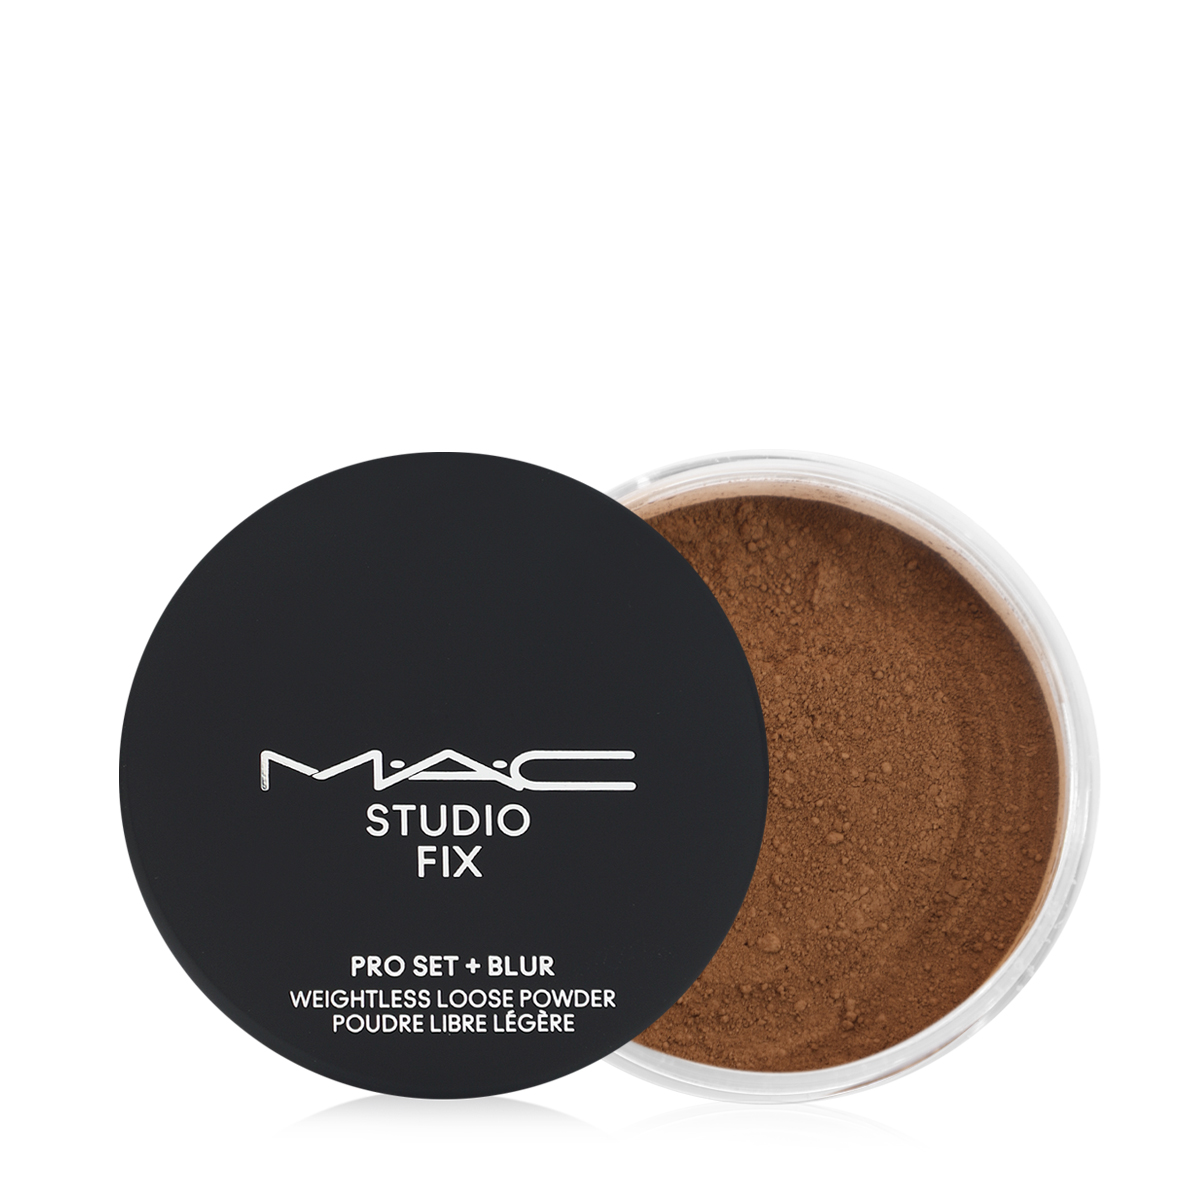 Studio Fix Pro Set + Blur Weightless Loose Powder, Translucent Powder